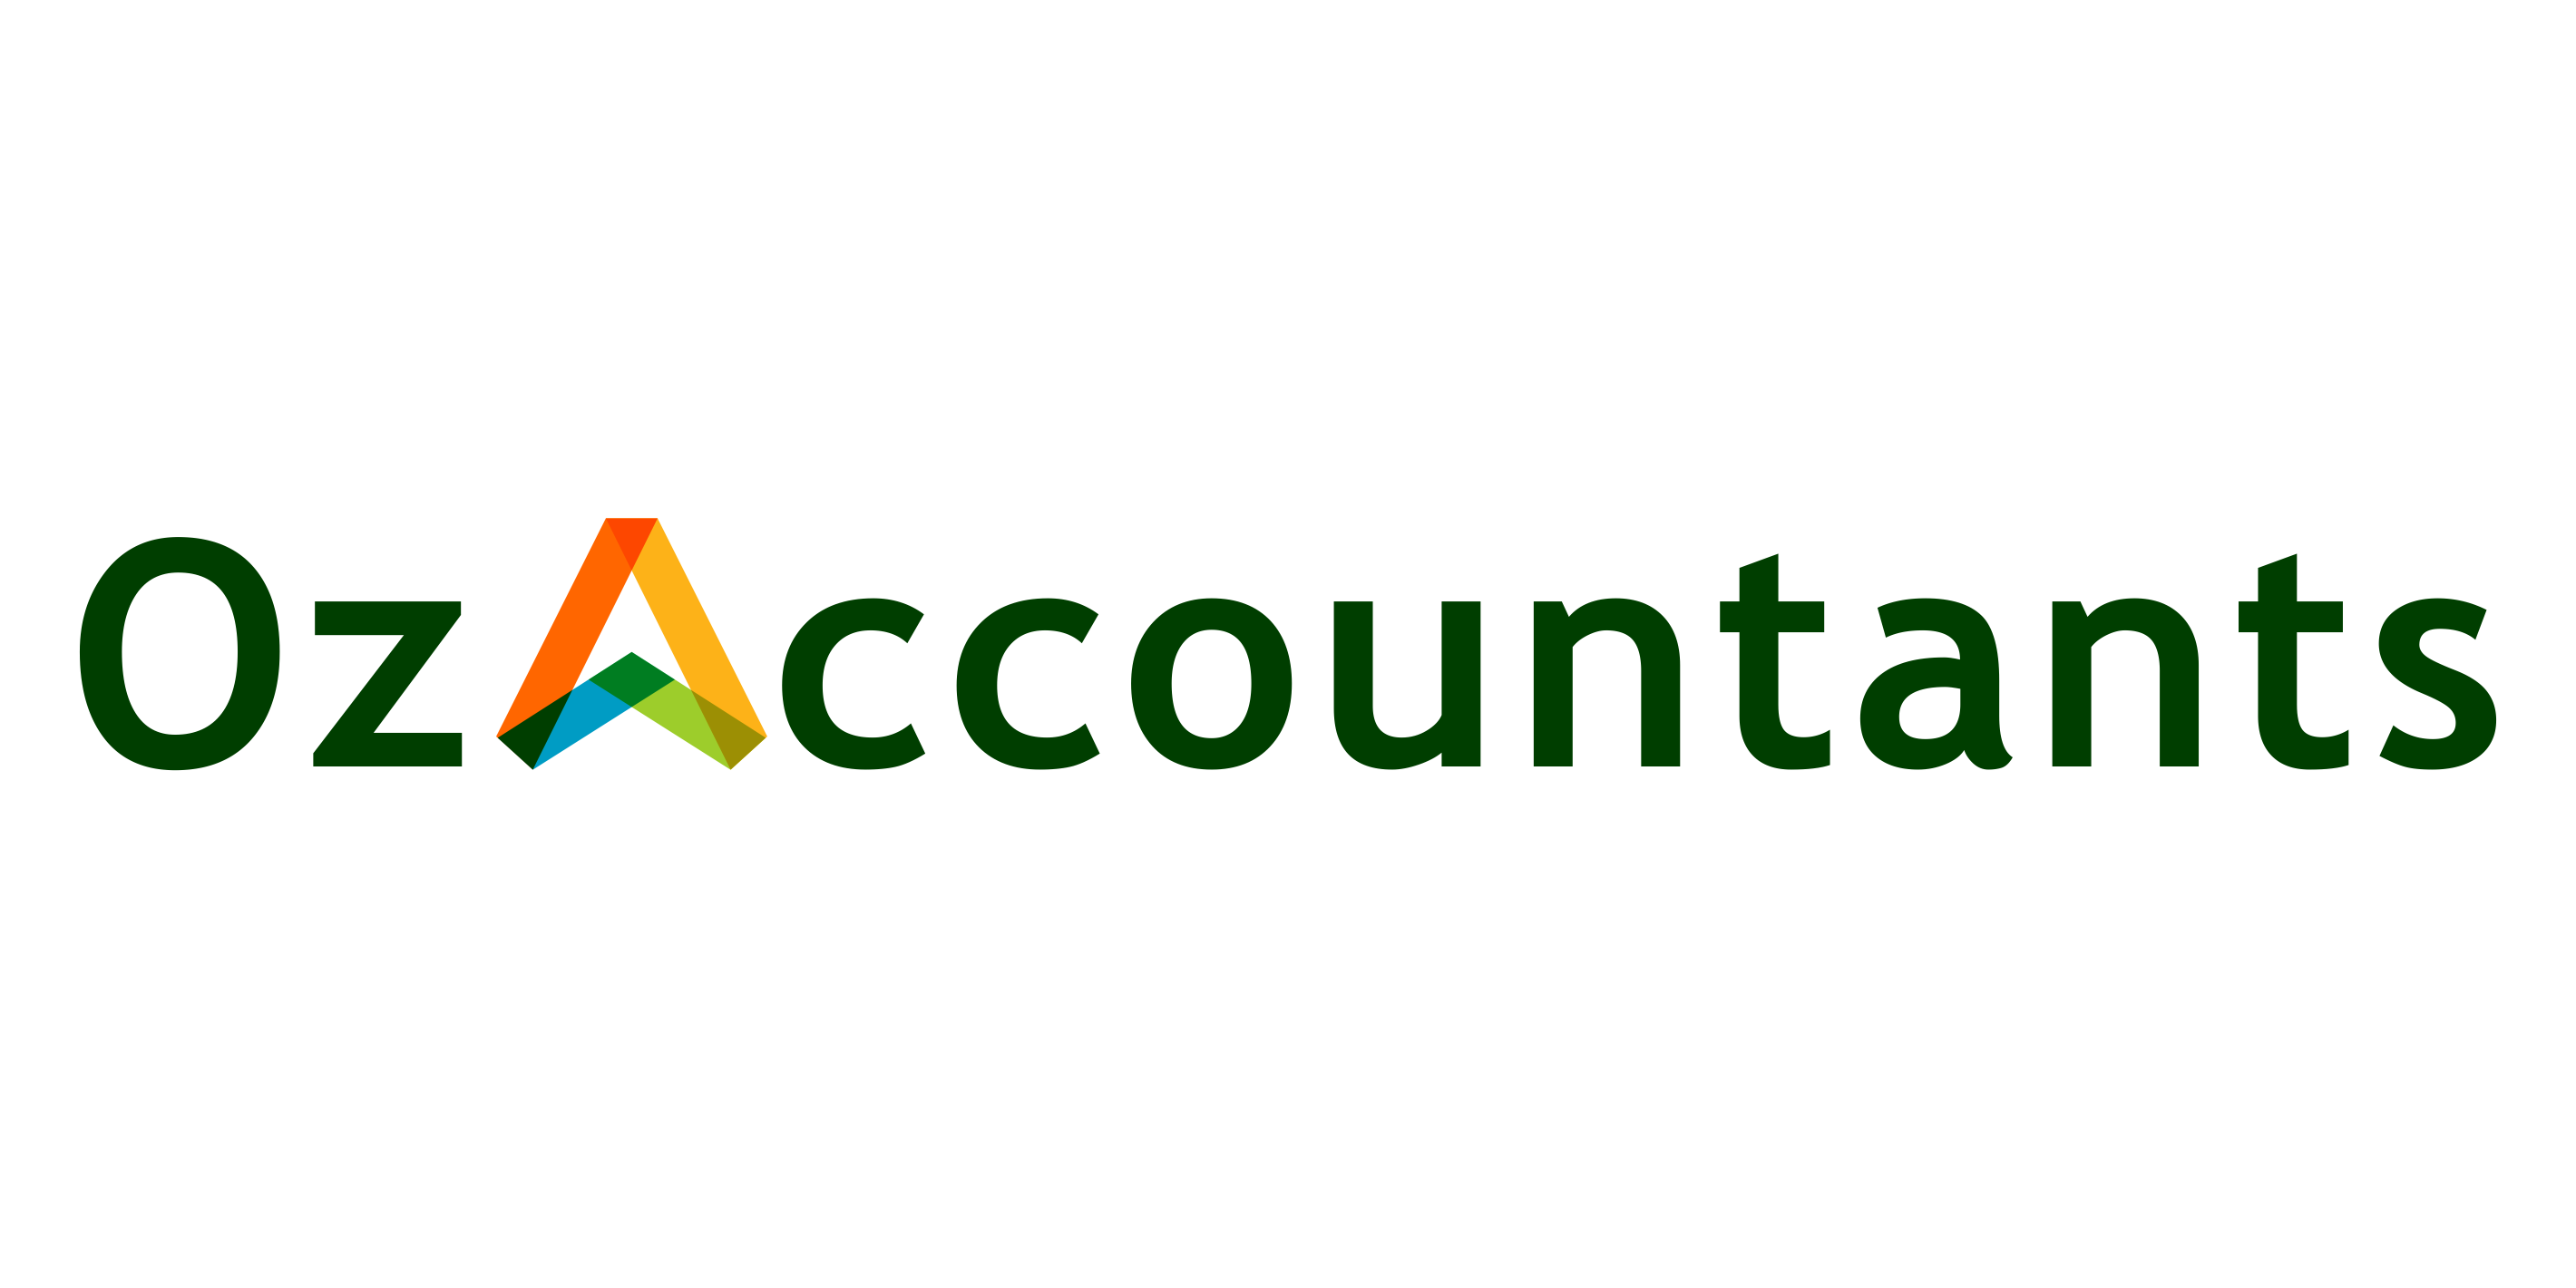 Oz Accountants